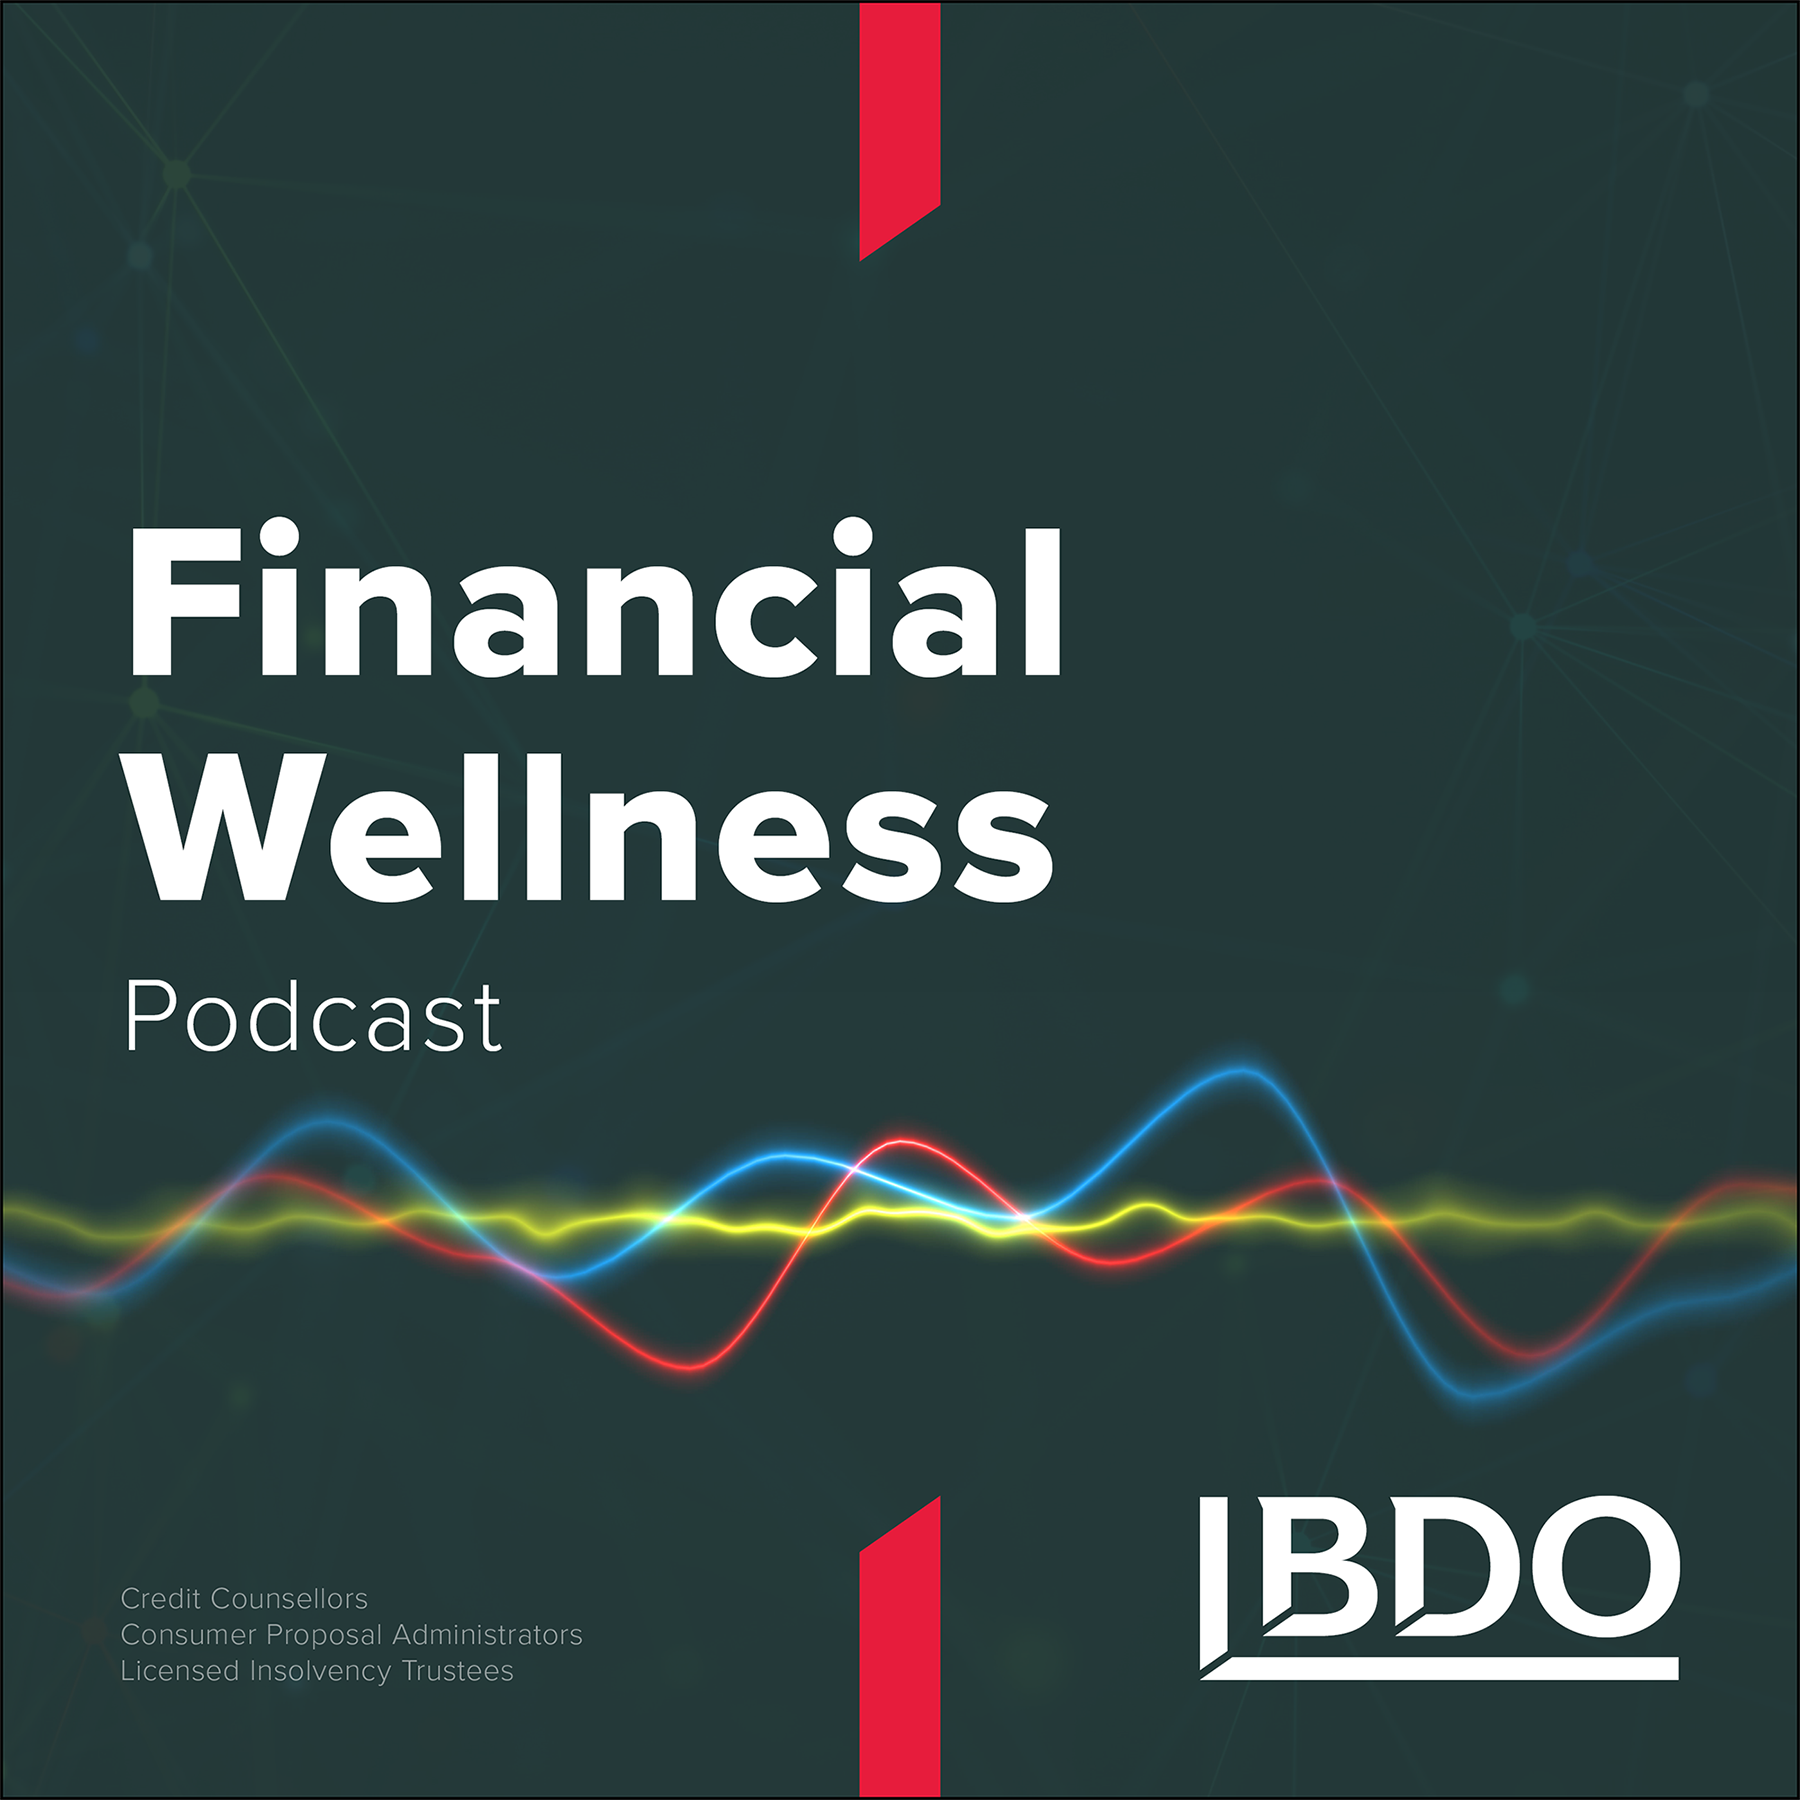 Financial Wellness Podcast by BDO Debt Solutions